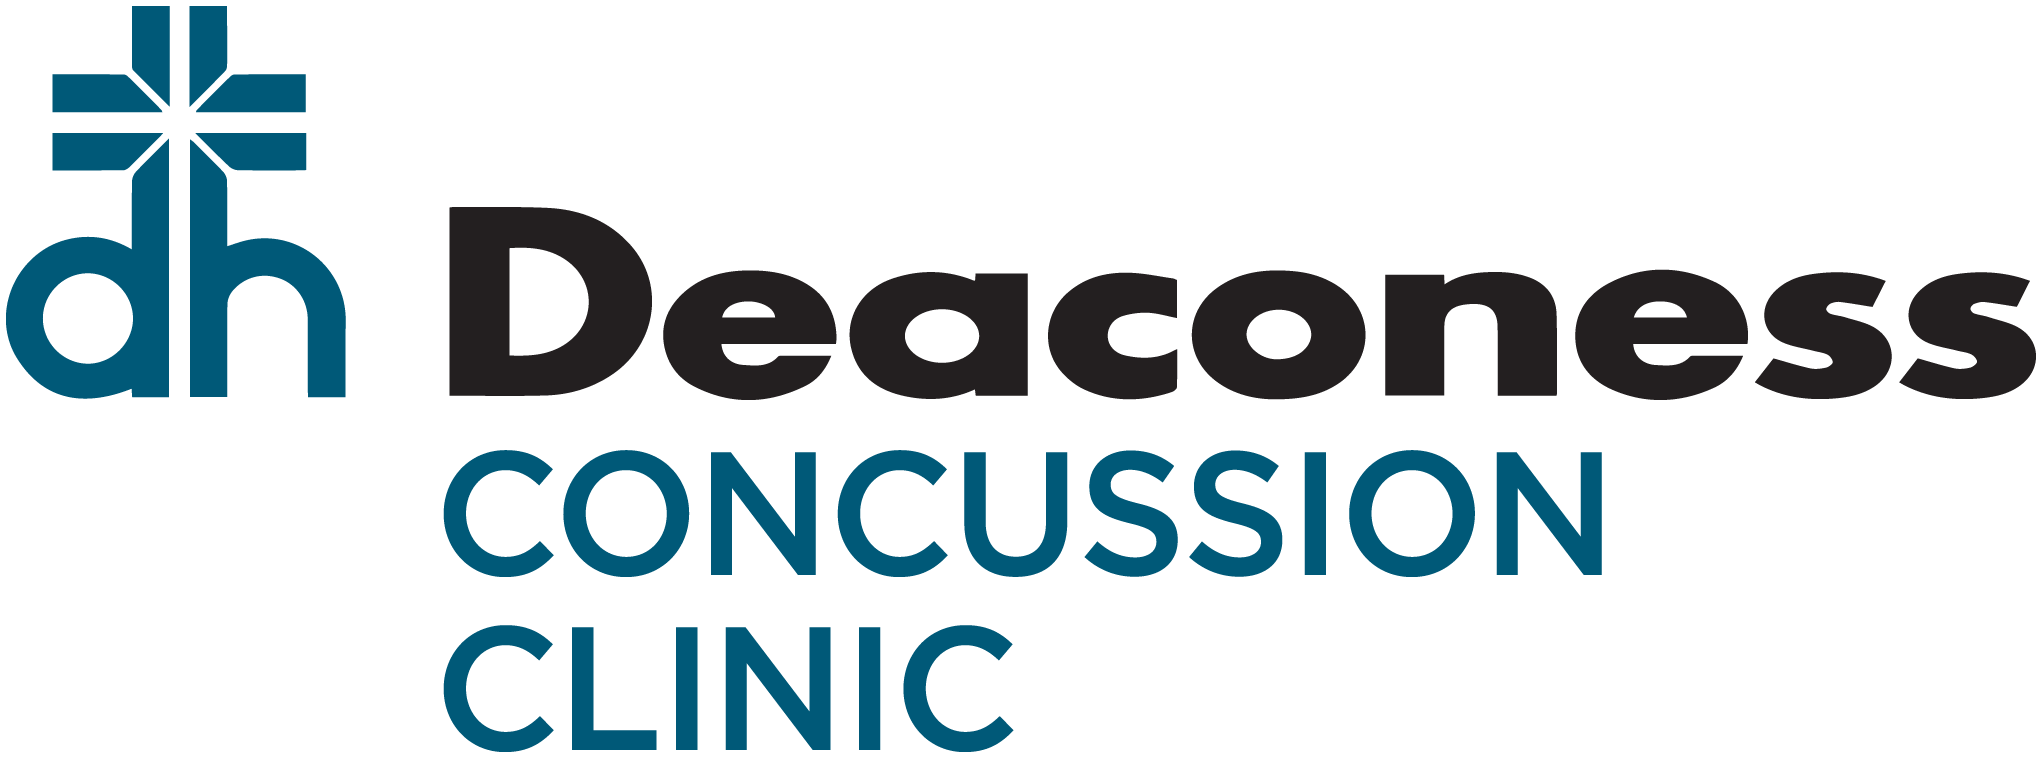 Deaconess Concussion Clinic